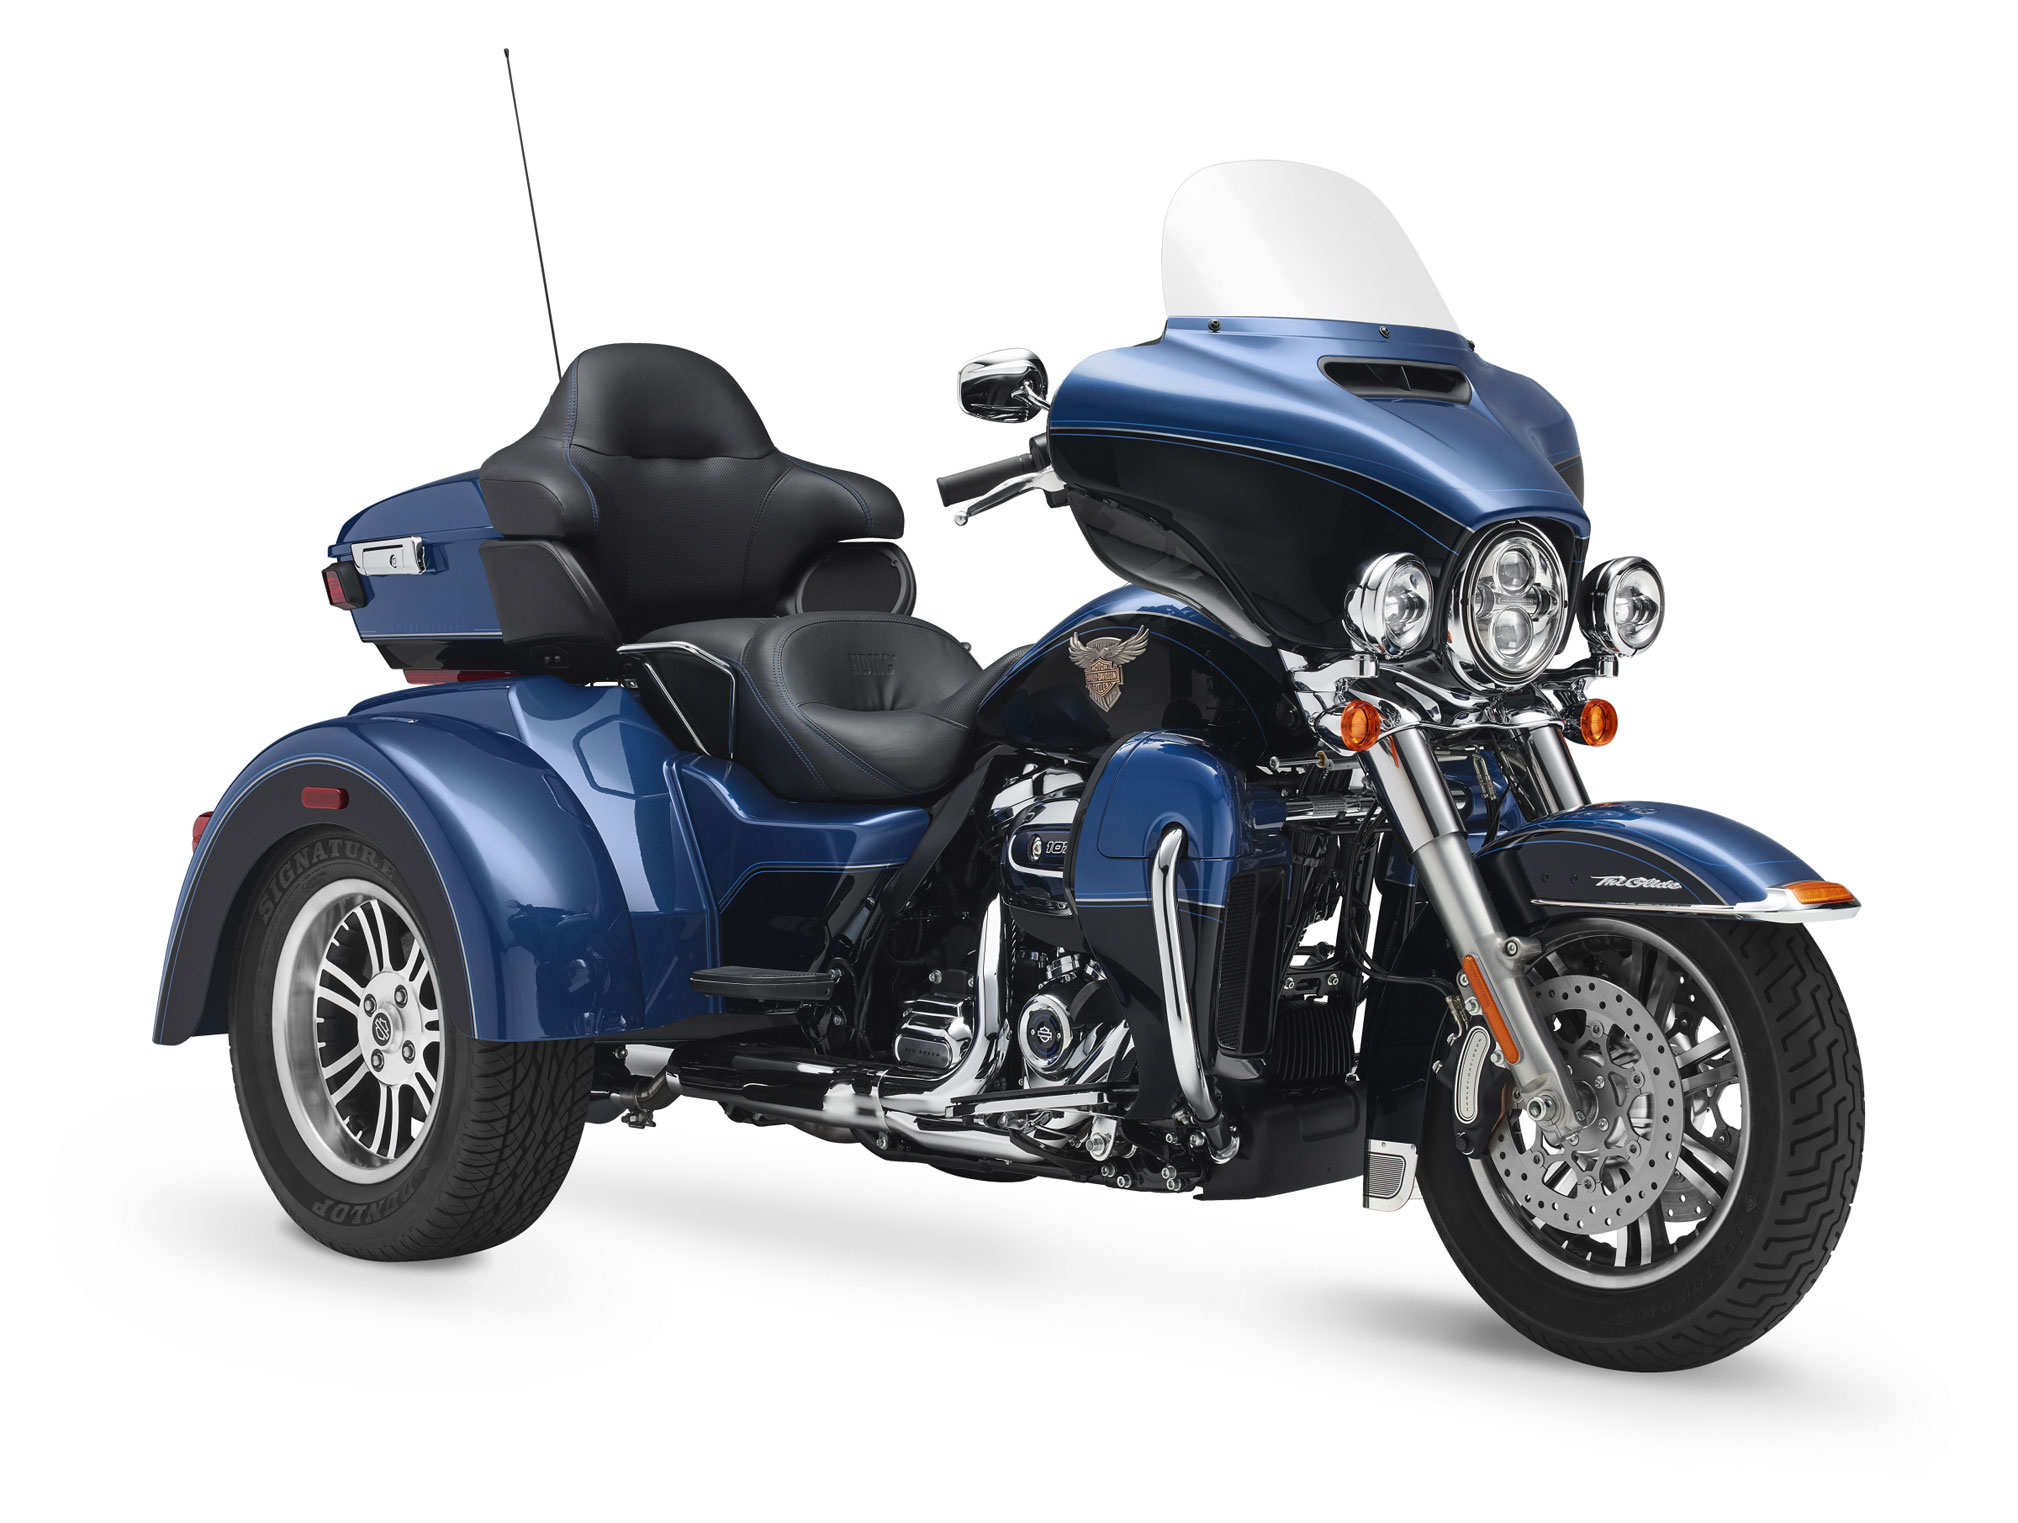 Harley Davidson Tri Glide Price In India Promotion Off56